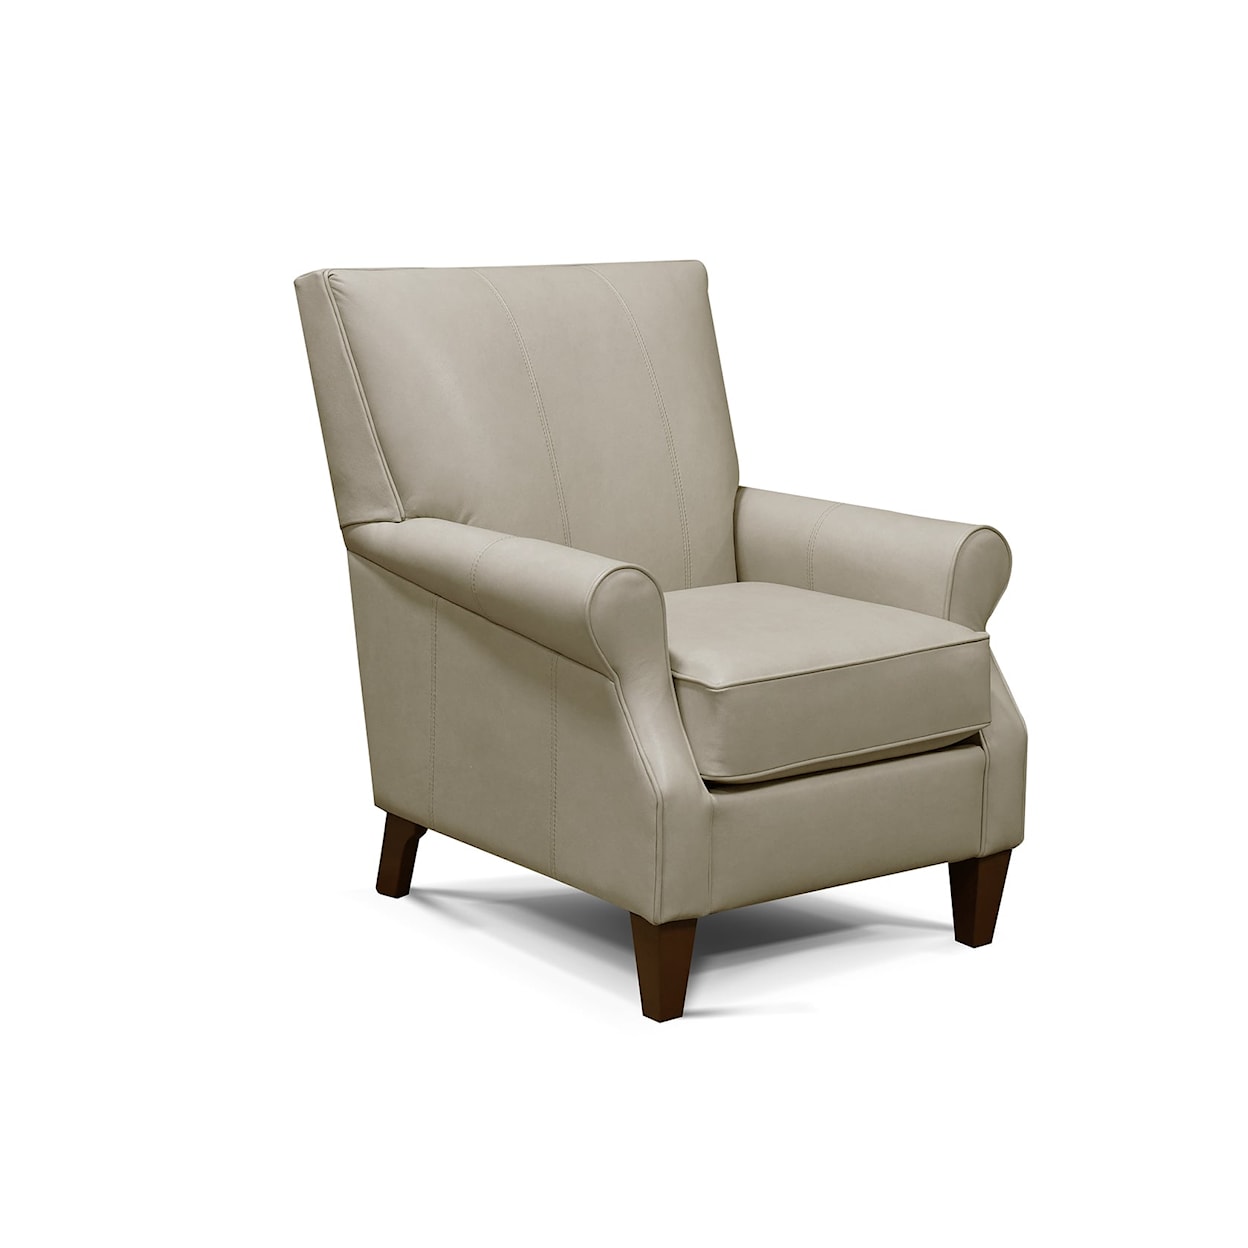 Dimensions 5D00/5D70/AL Series Leather Accent Chair